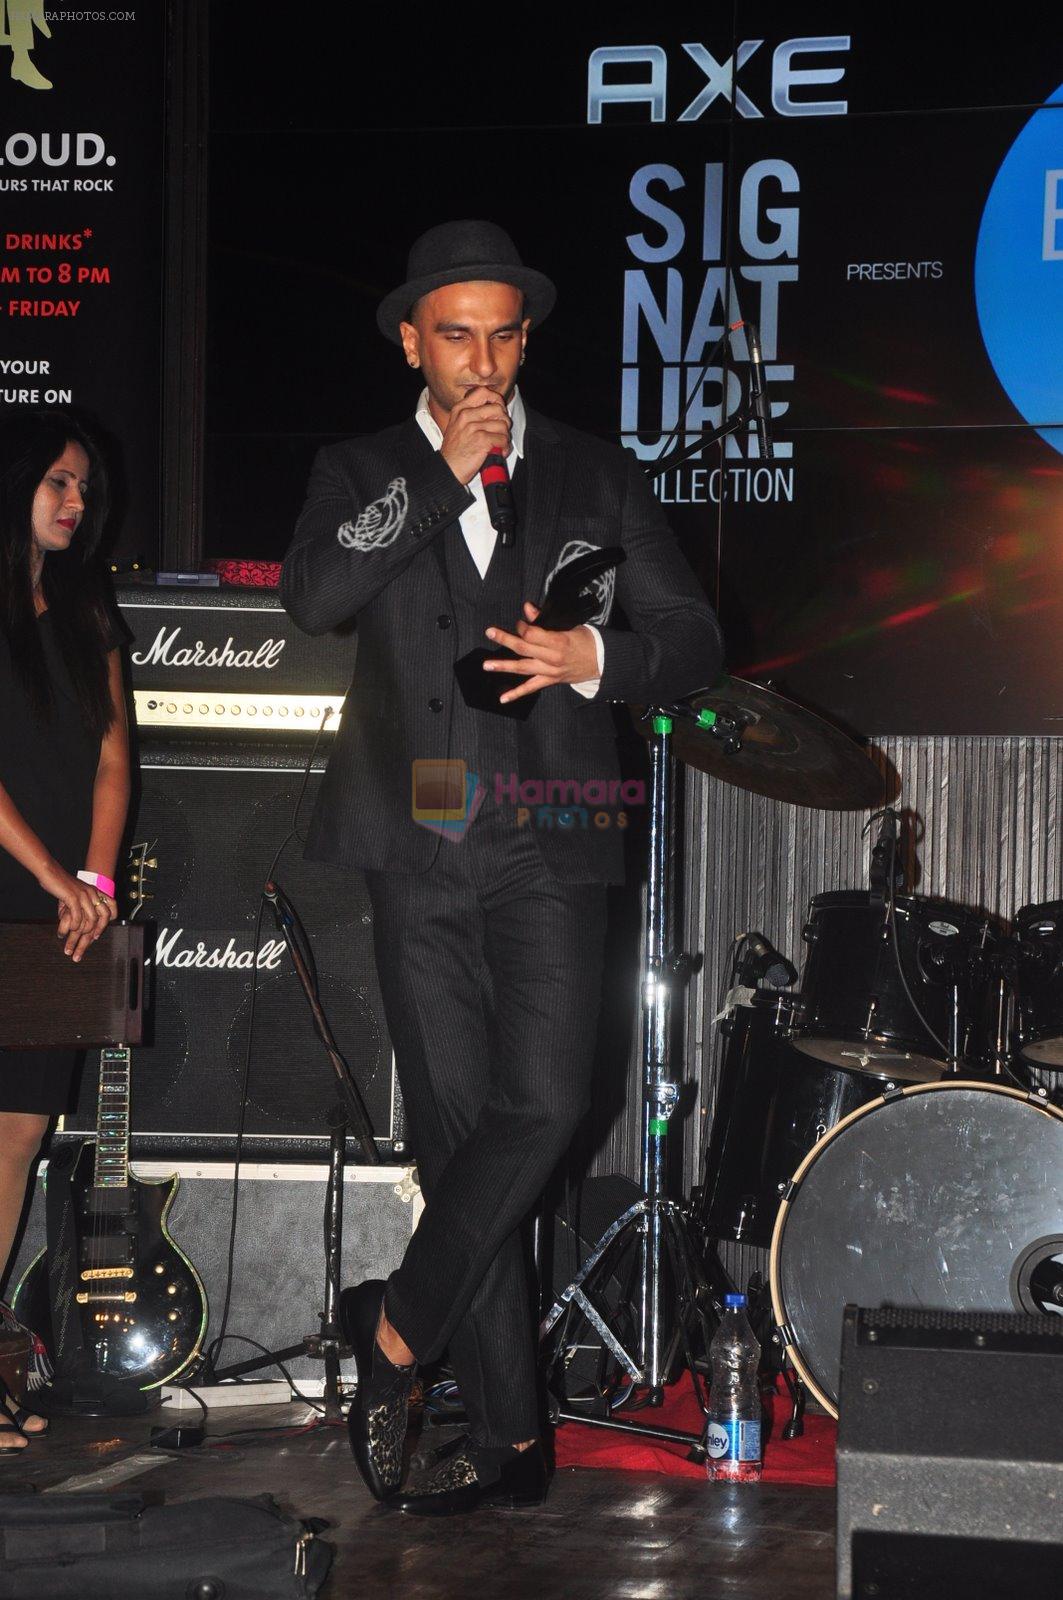 Ranveer Singh at Fhm bachelor of the year bash in Hard Rock Cafe on 22nd Dec 2014